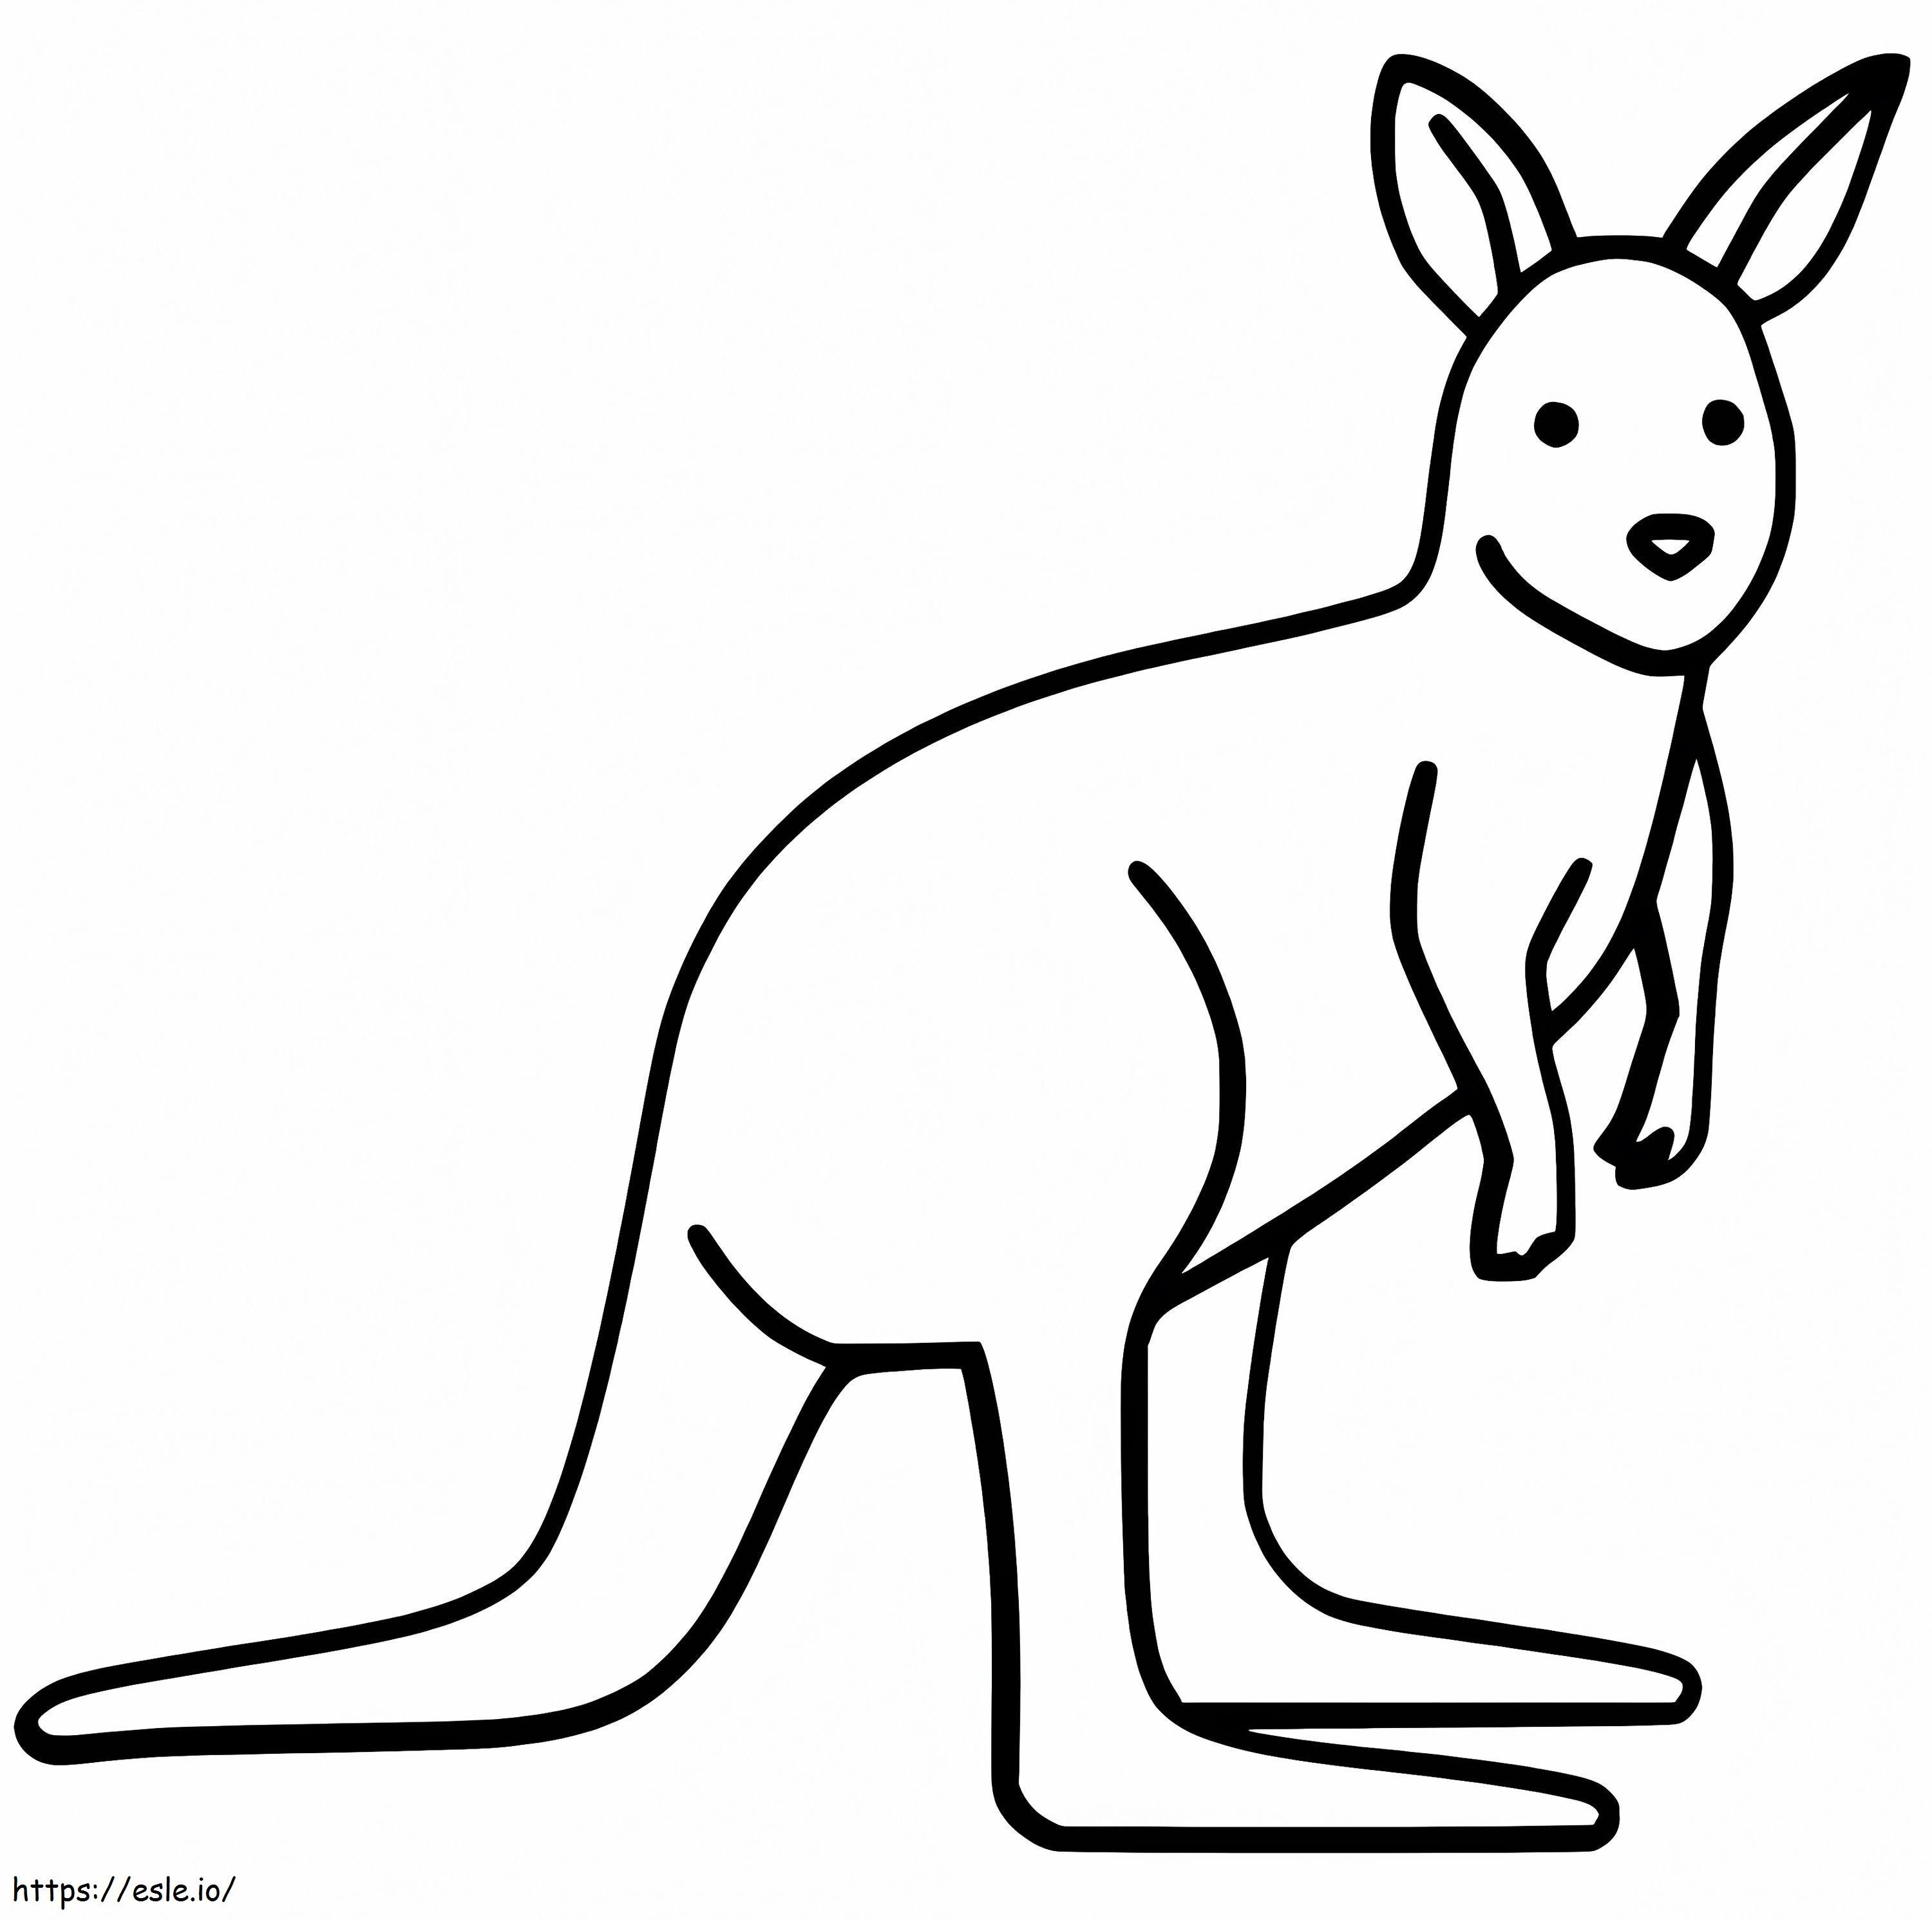 Wallaby imprimível para colorir